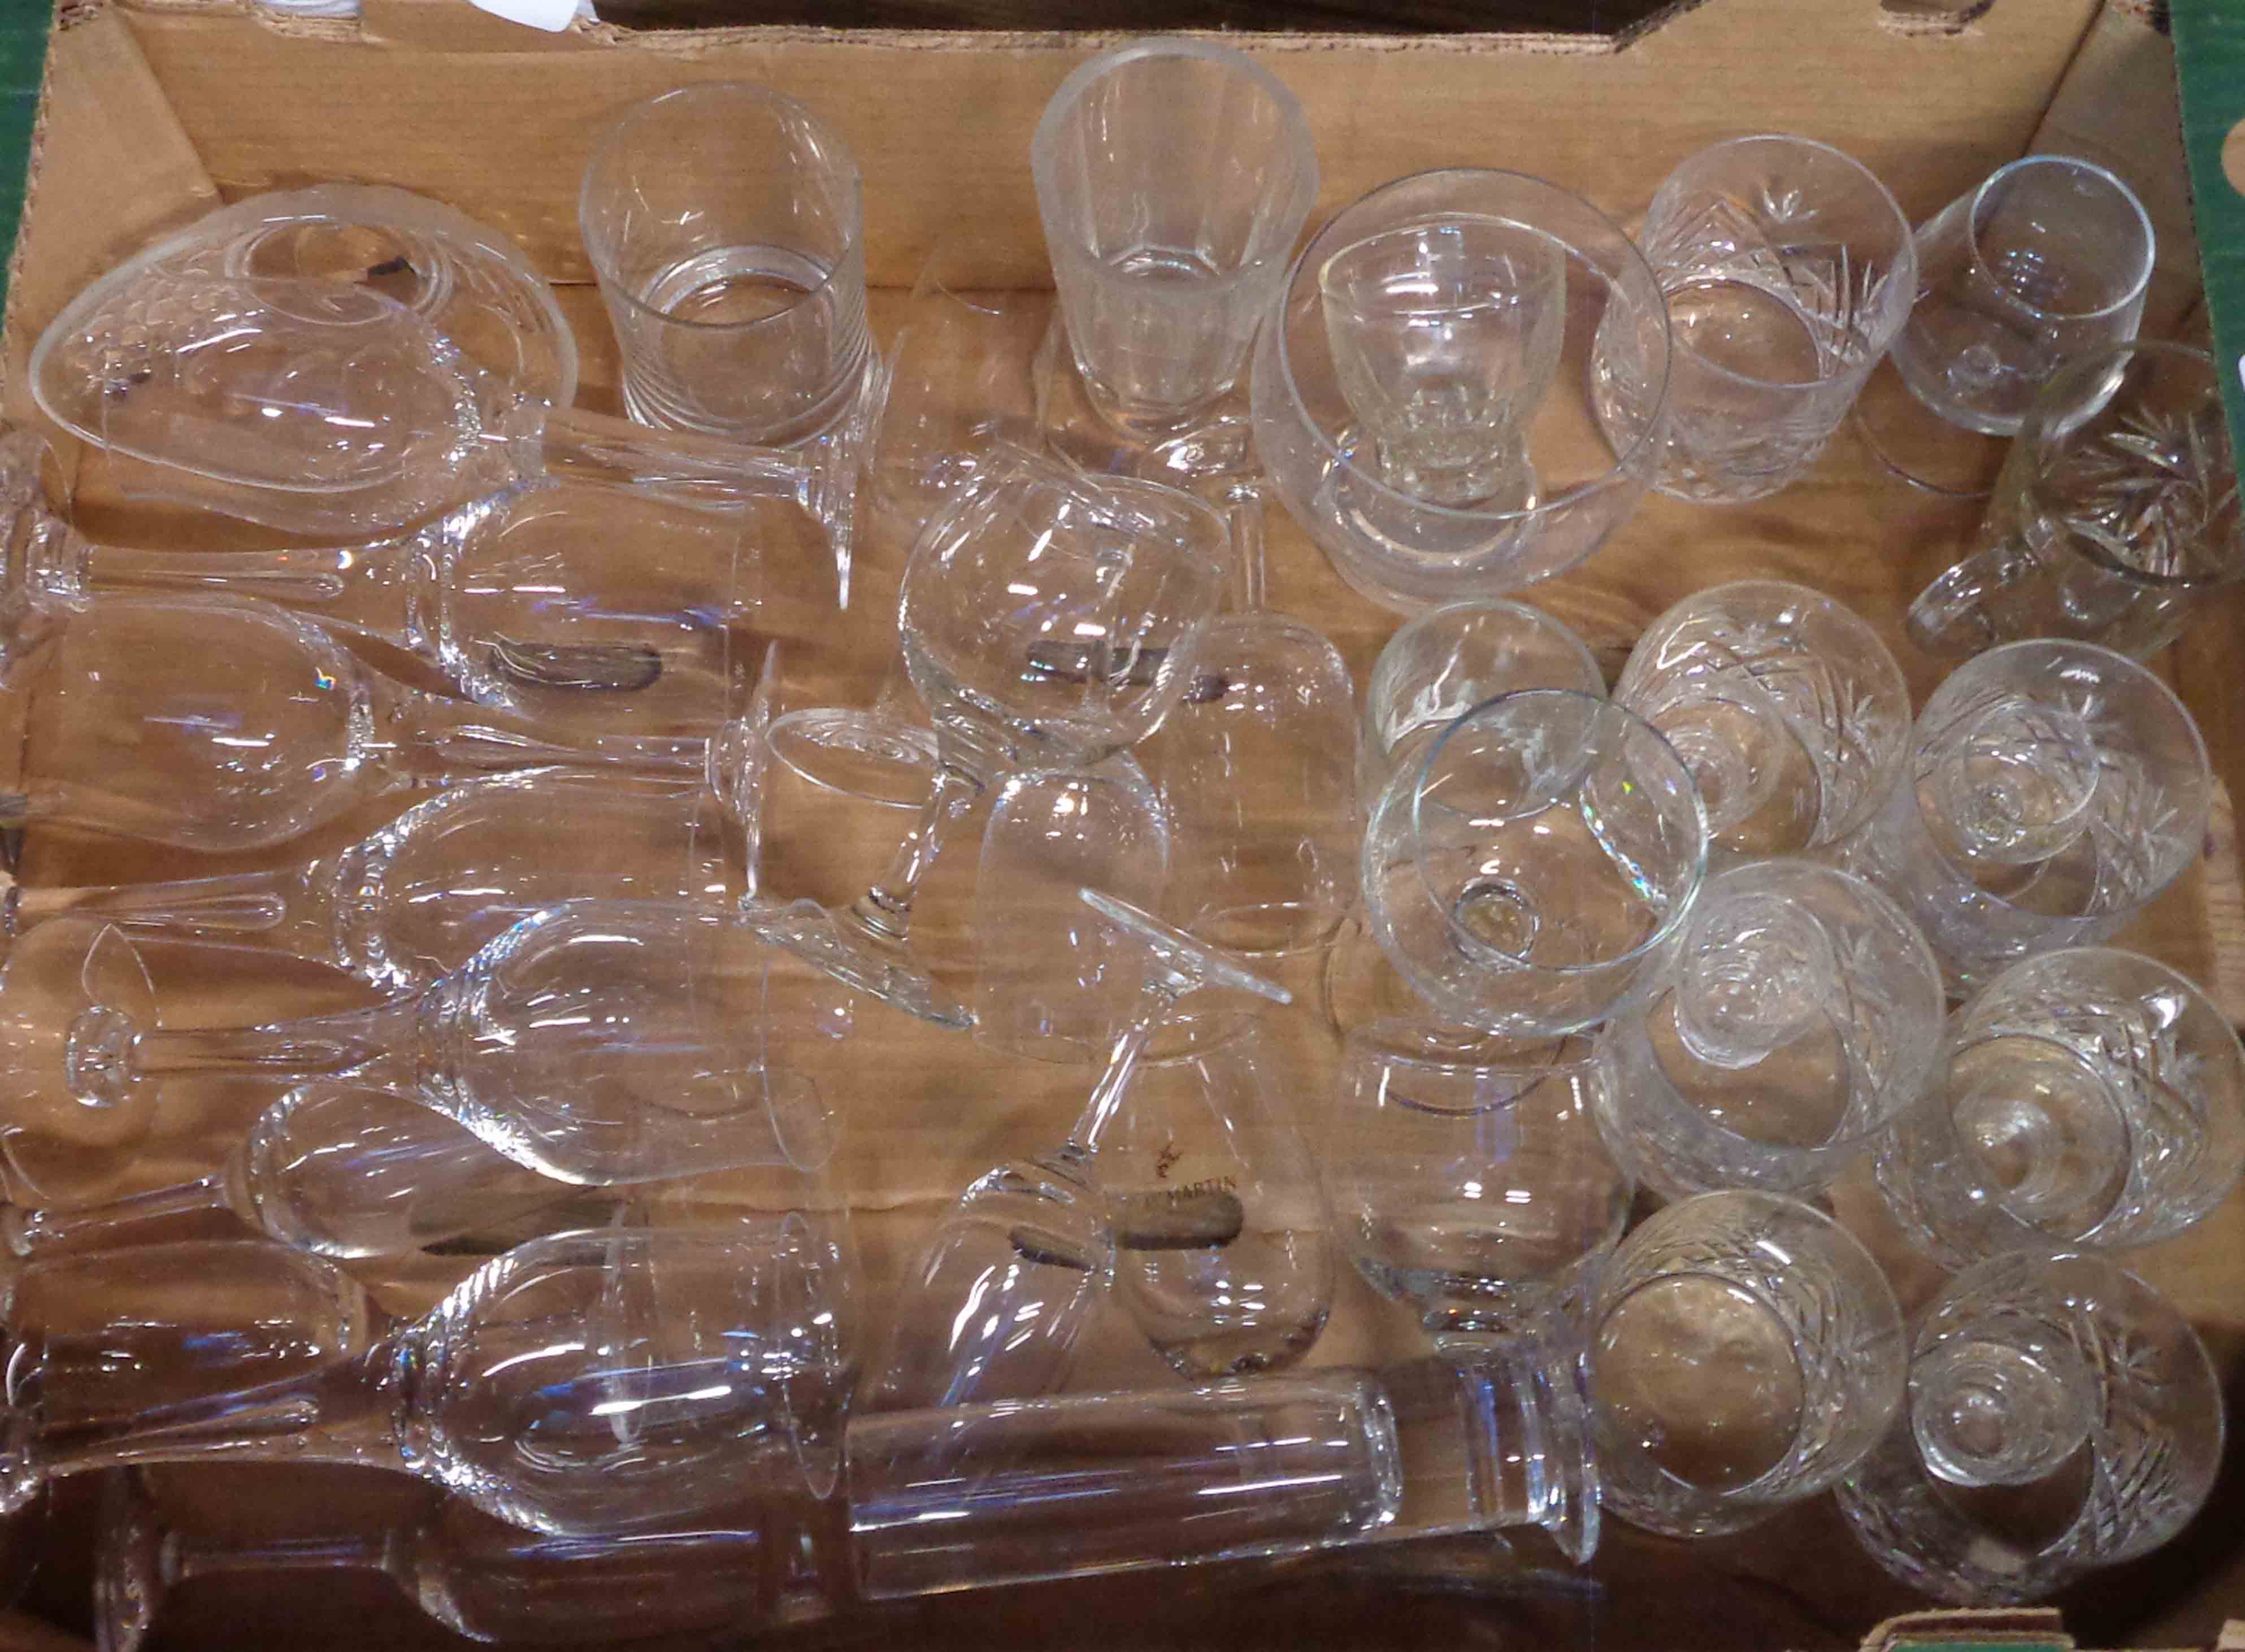 A box containing a quantity of glassware